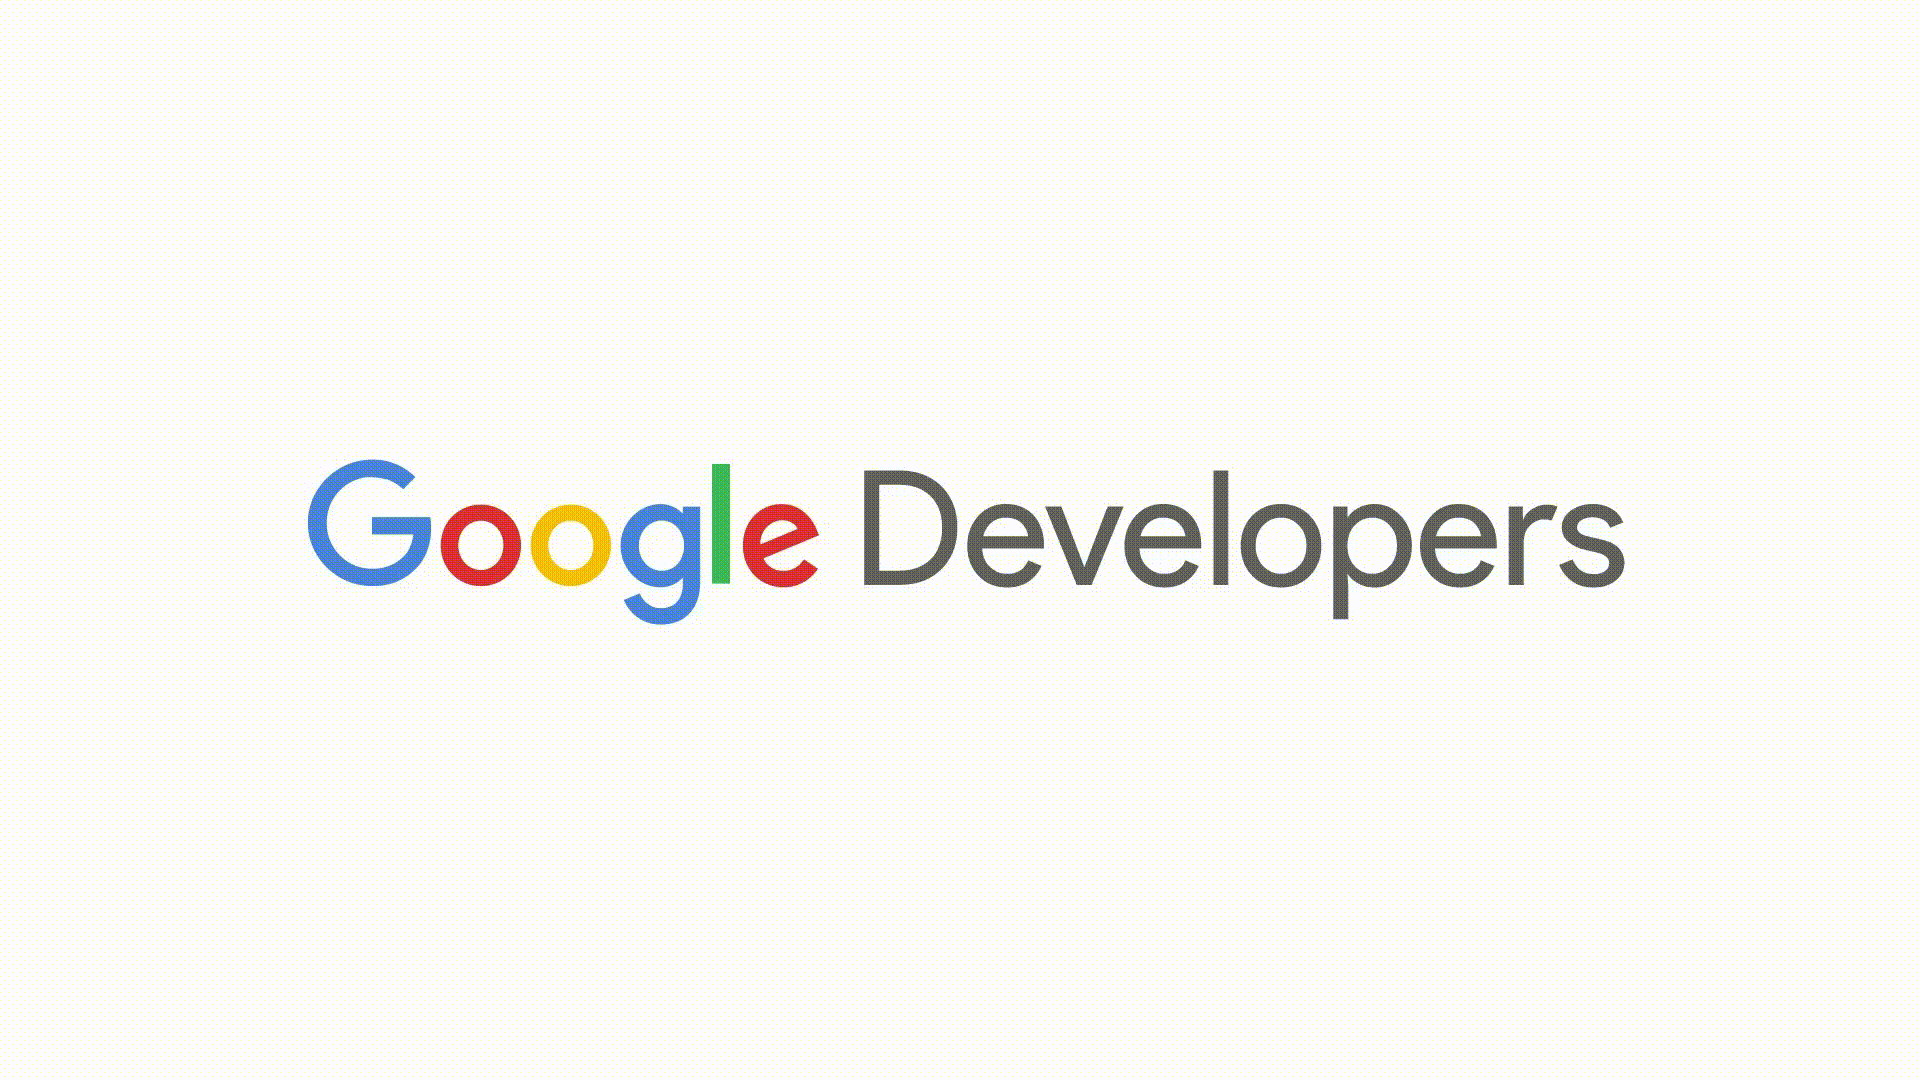 Google Developer Student Clubs By Presence Google Developers